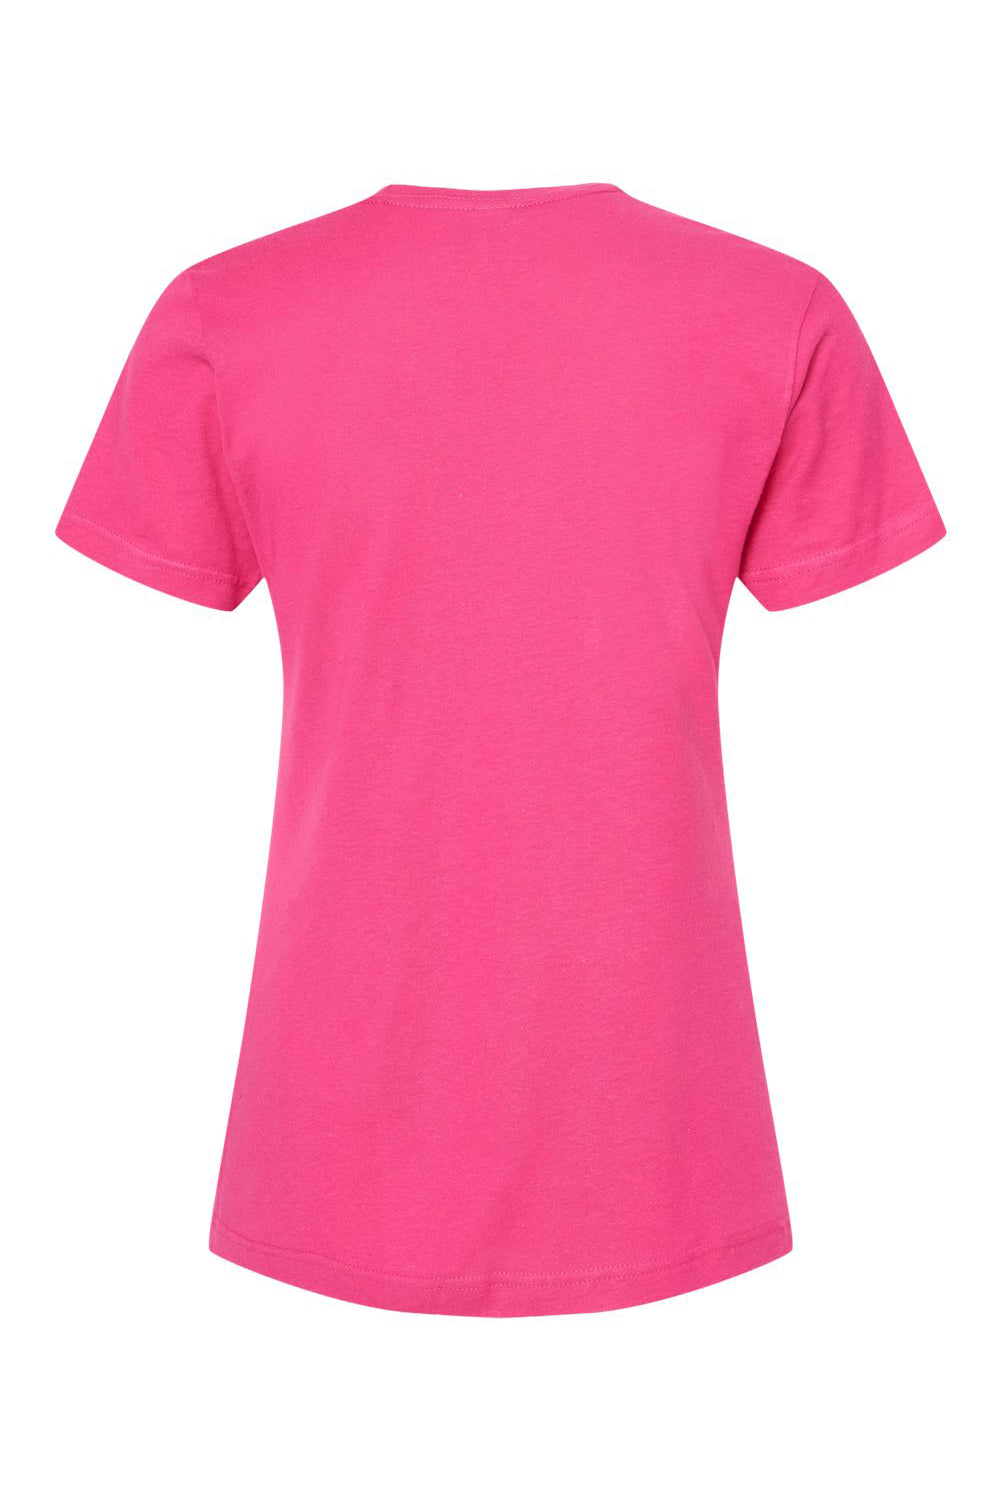 Tultex 216 Womens Fine Jersey Classic Fit Short Sleeve Crewneck T-Shirt Fuchsia Pink Flat Back